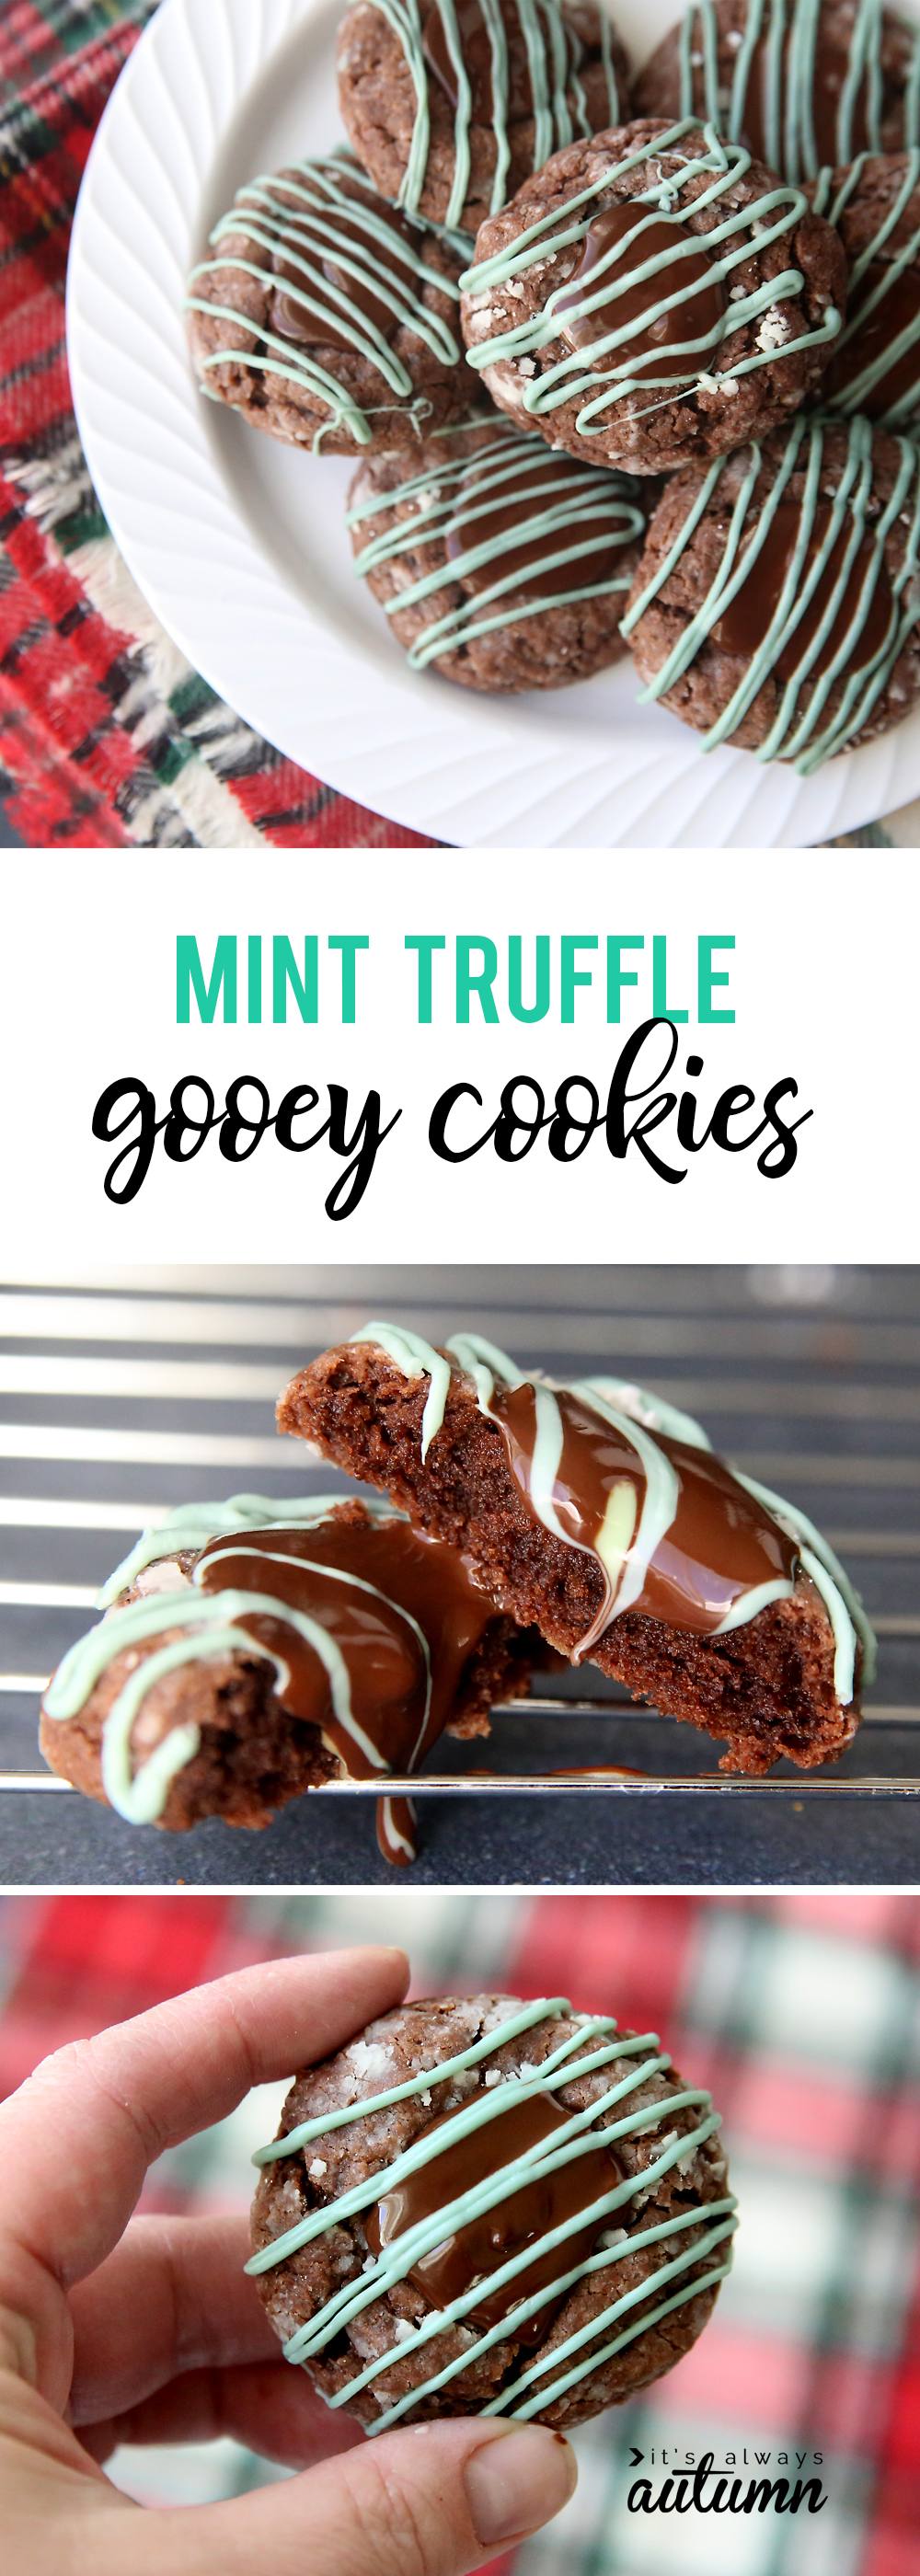 Mint truffle gooey cookies